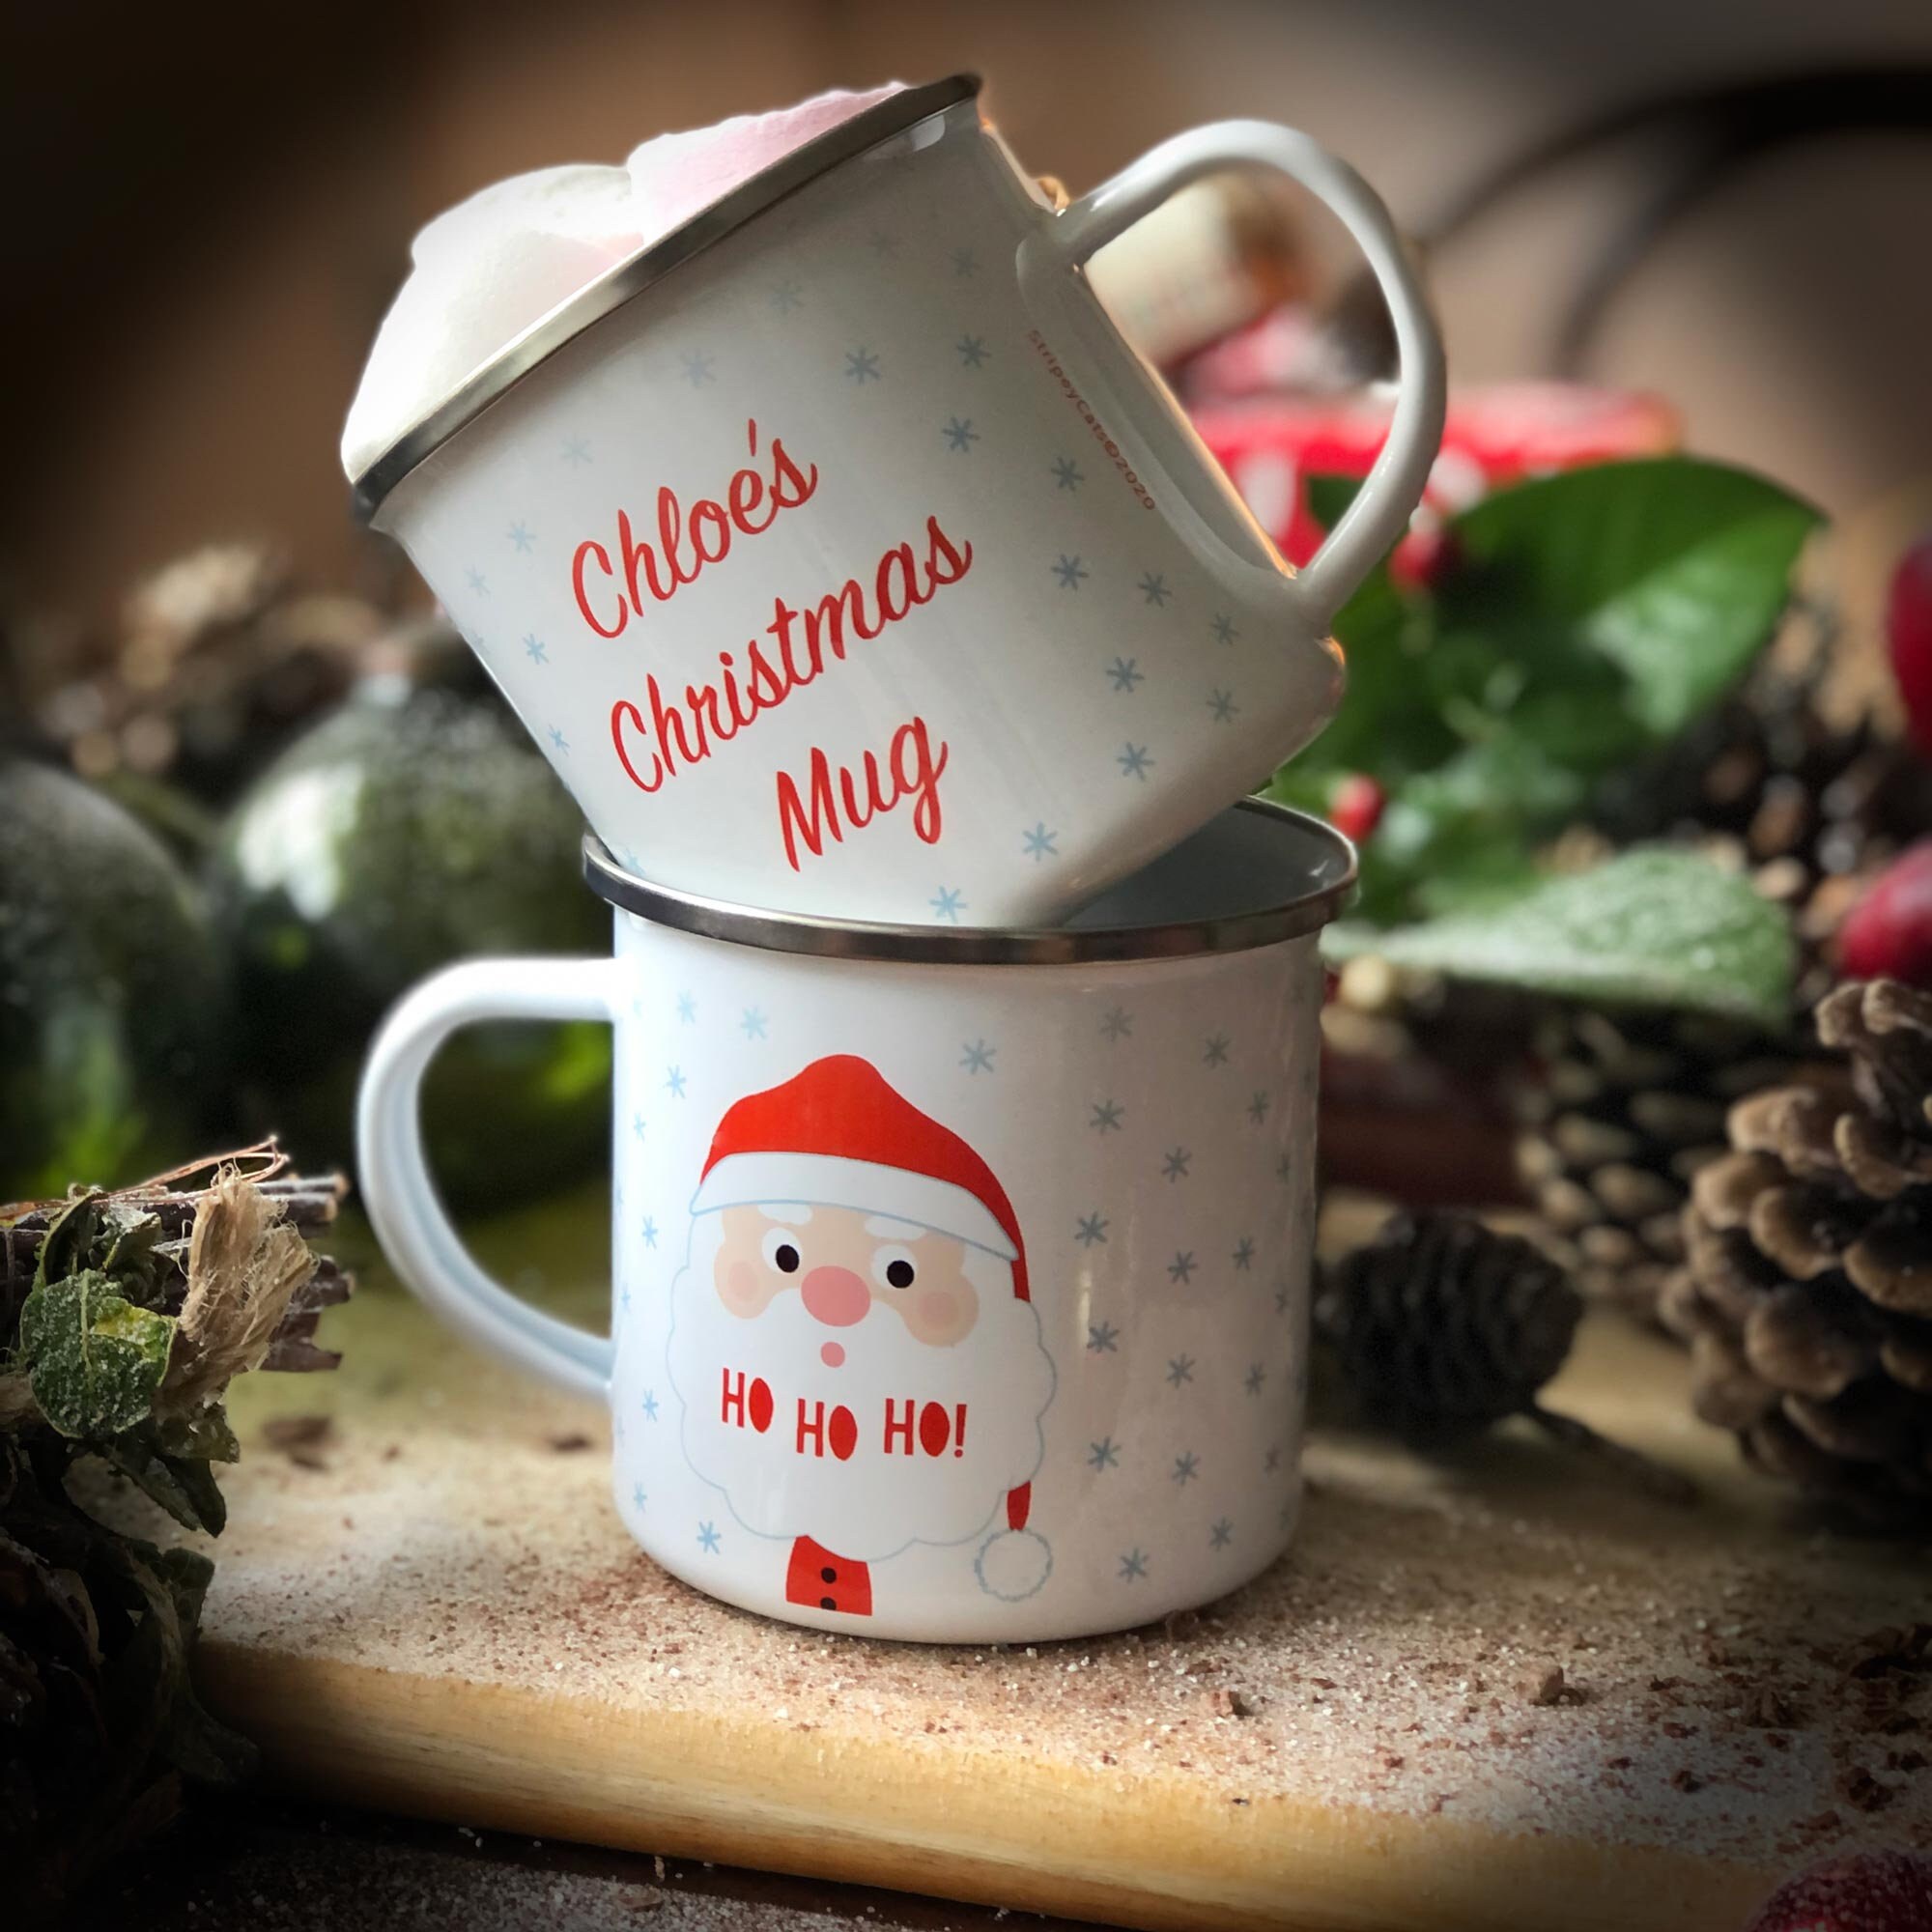 Christmas Film Stocking Filler Christmas Eve Box Gift for family Secret Santa Gift Personalised Love Christmas Name Ceramic Mug Cup